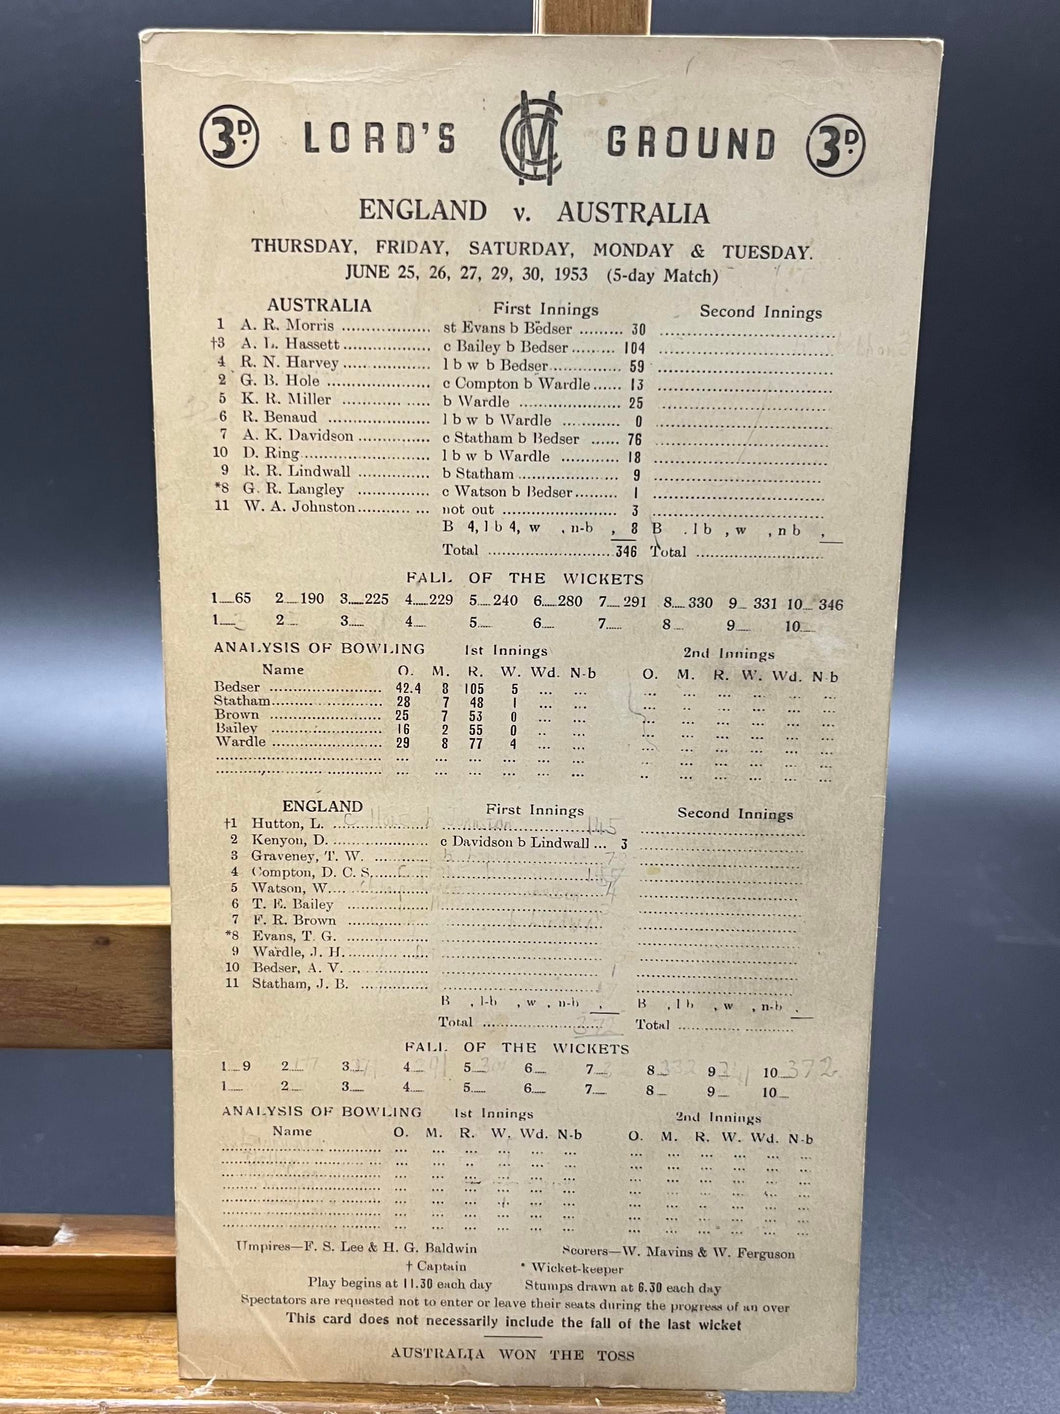 1953 Lord's Ground Original Score Card - England vs Australia